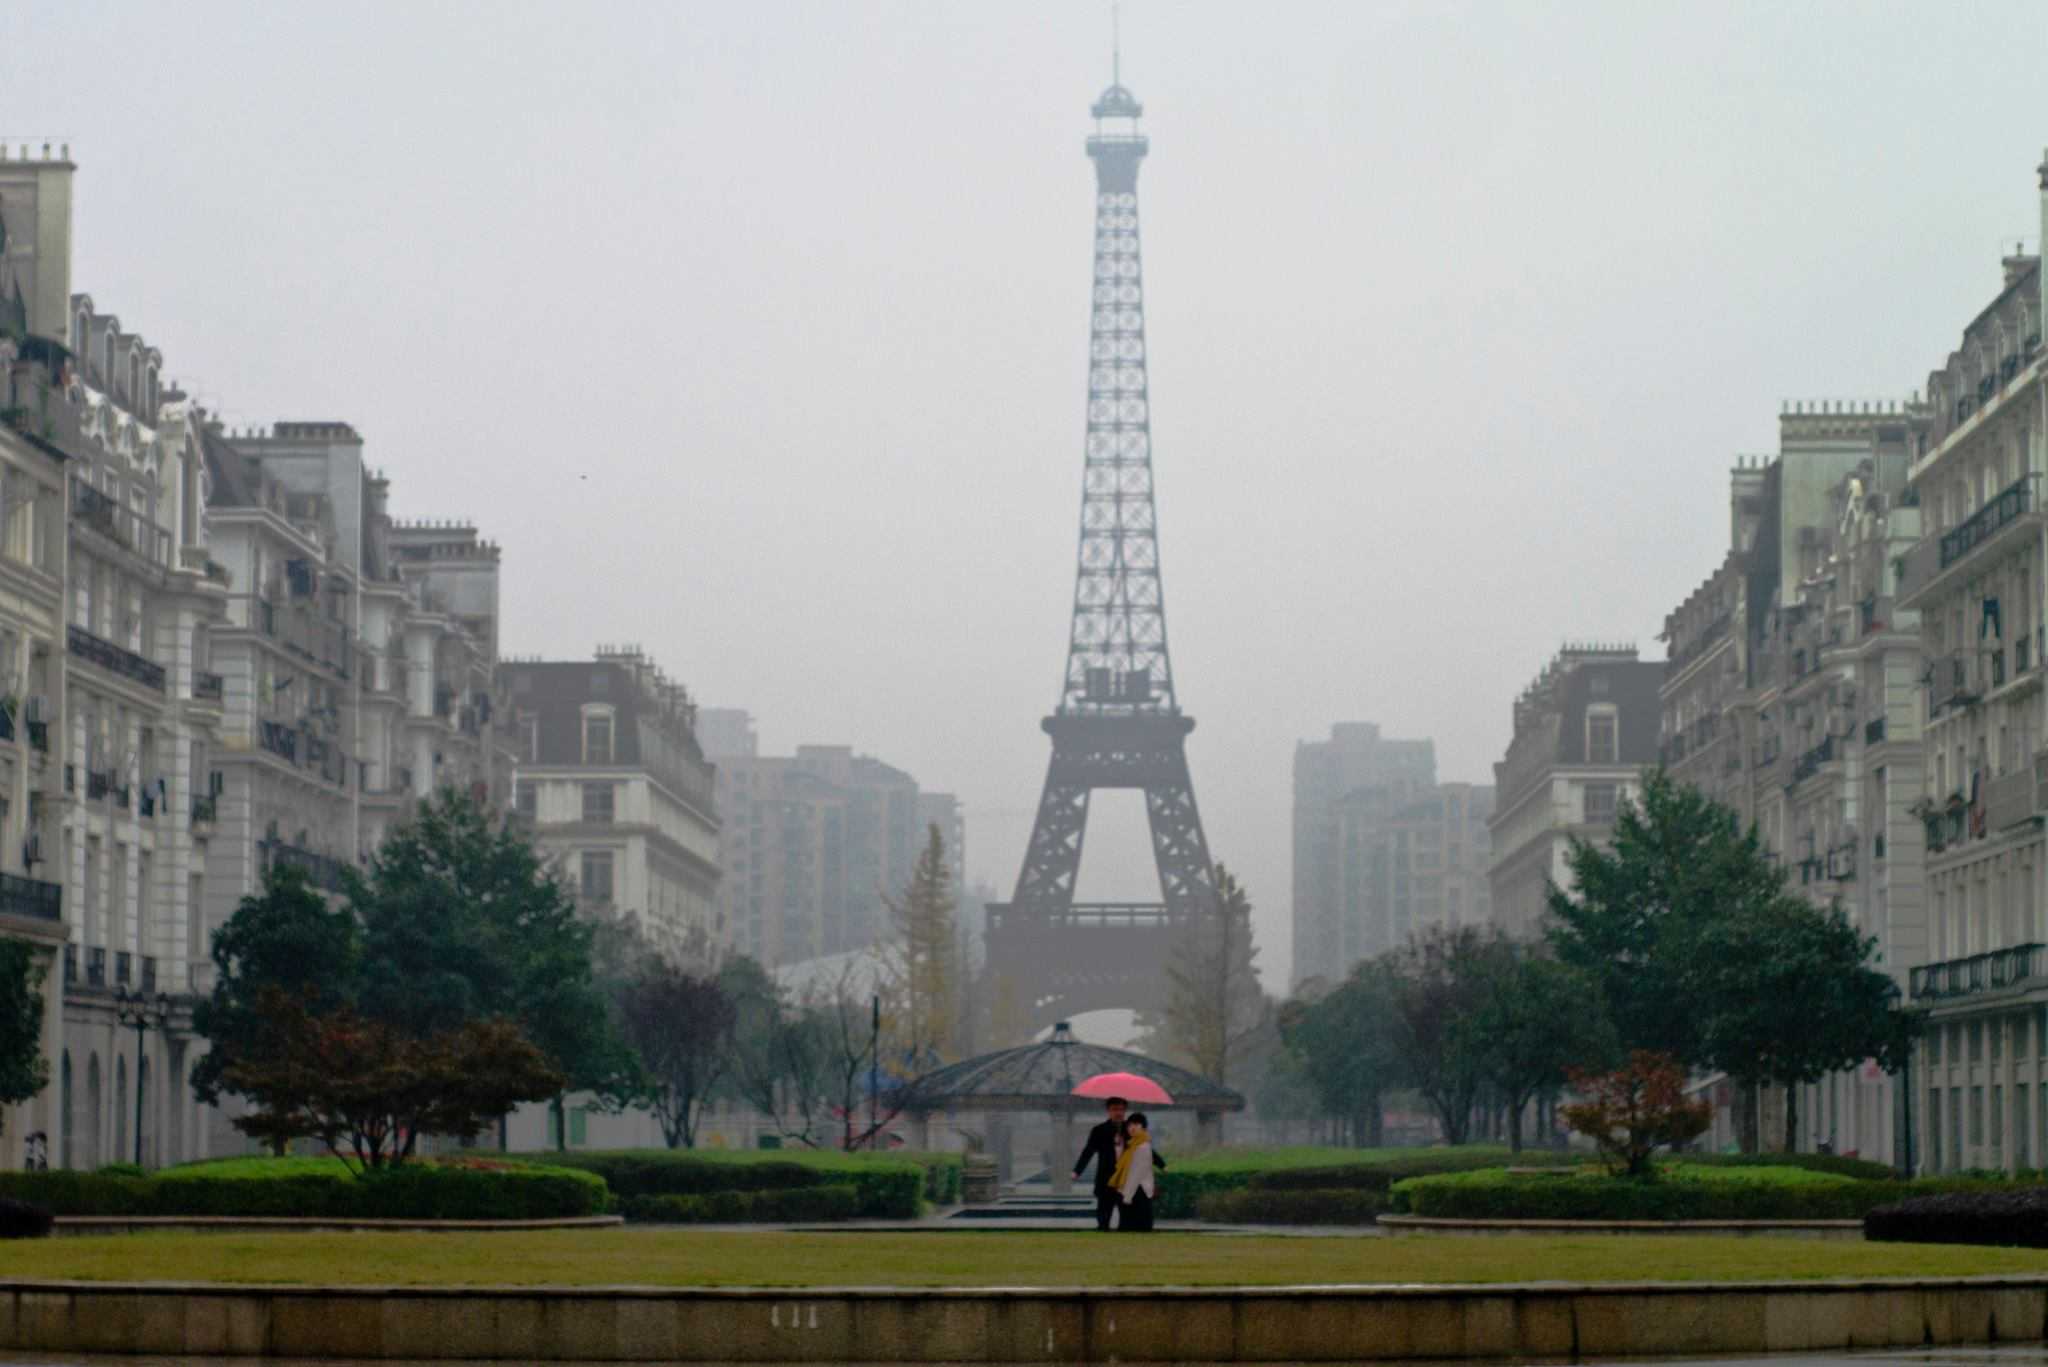 Pictures of Paris Replica in China